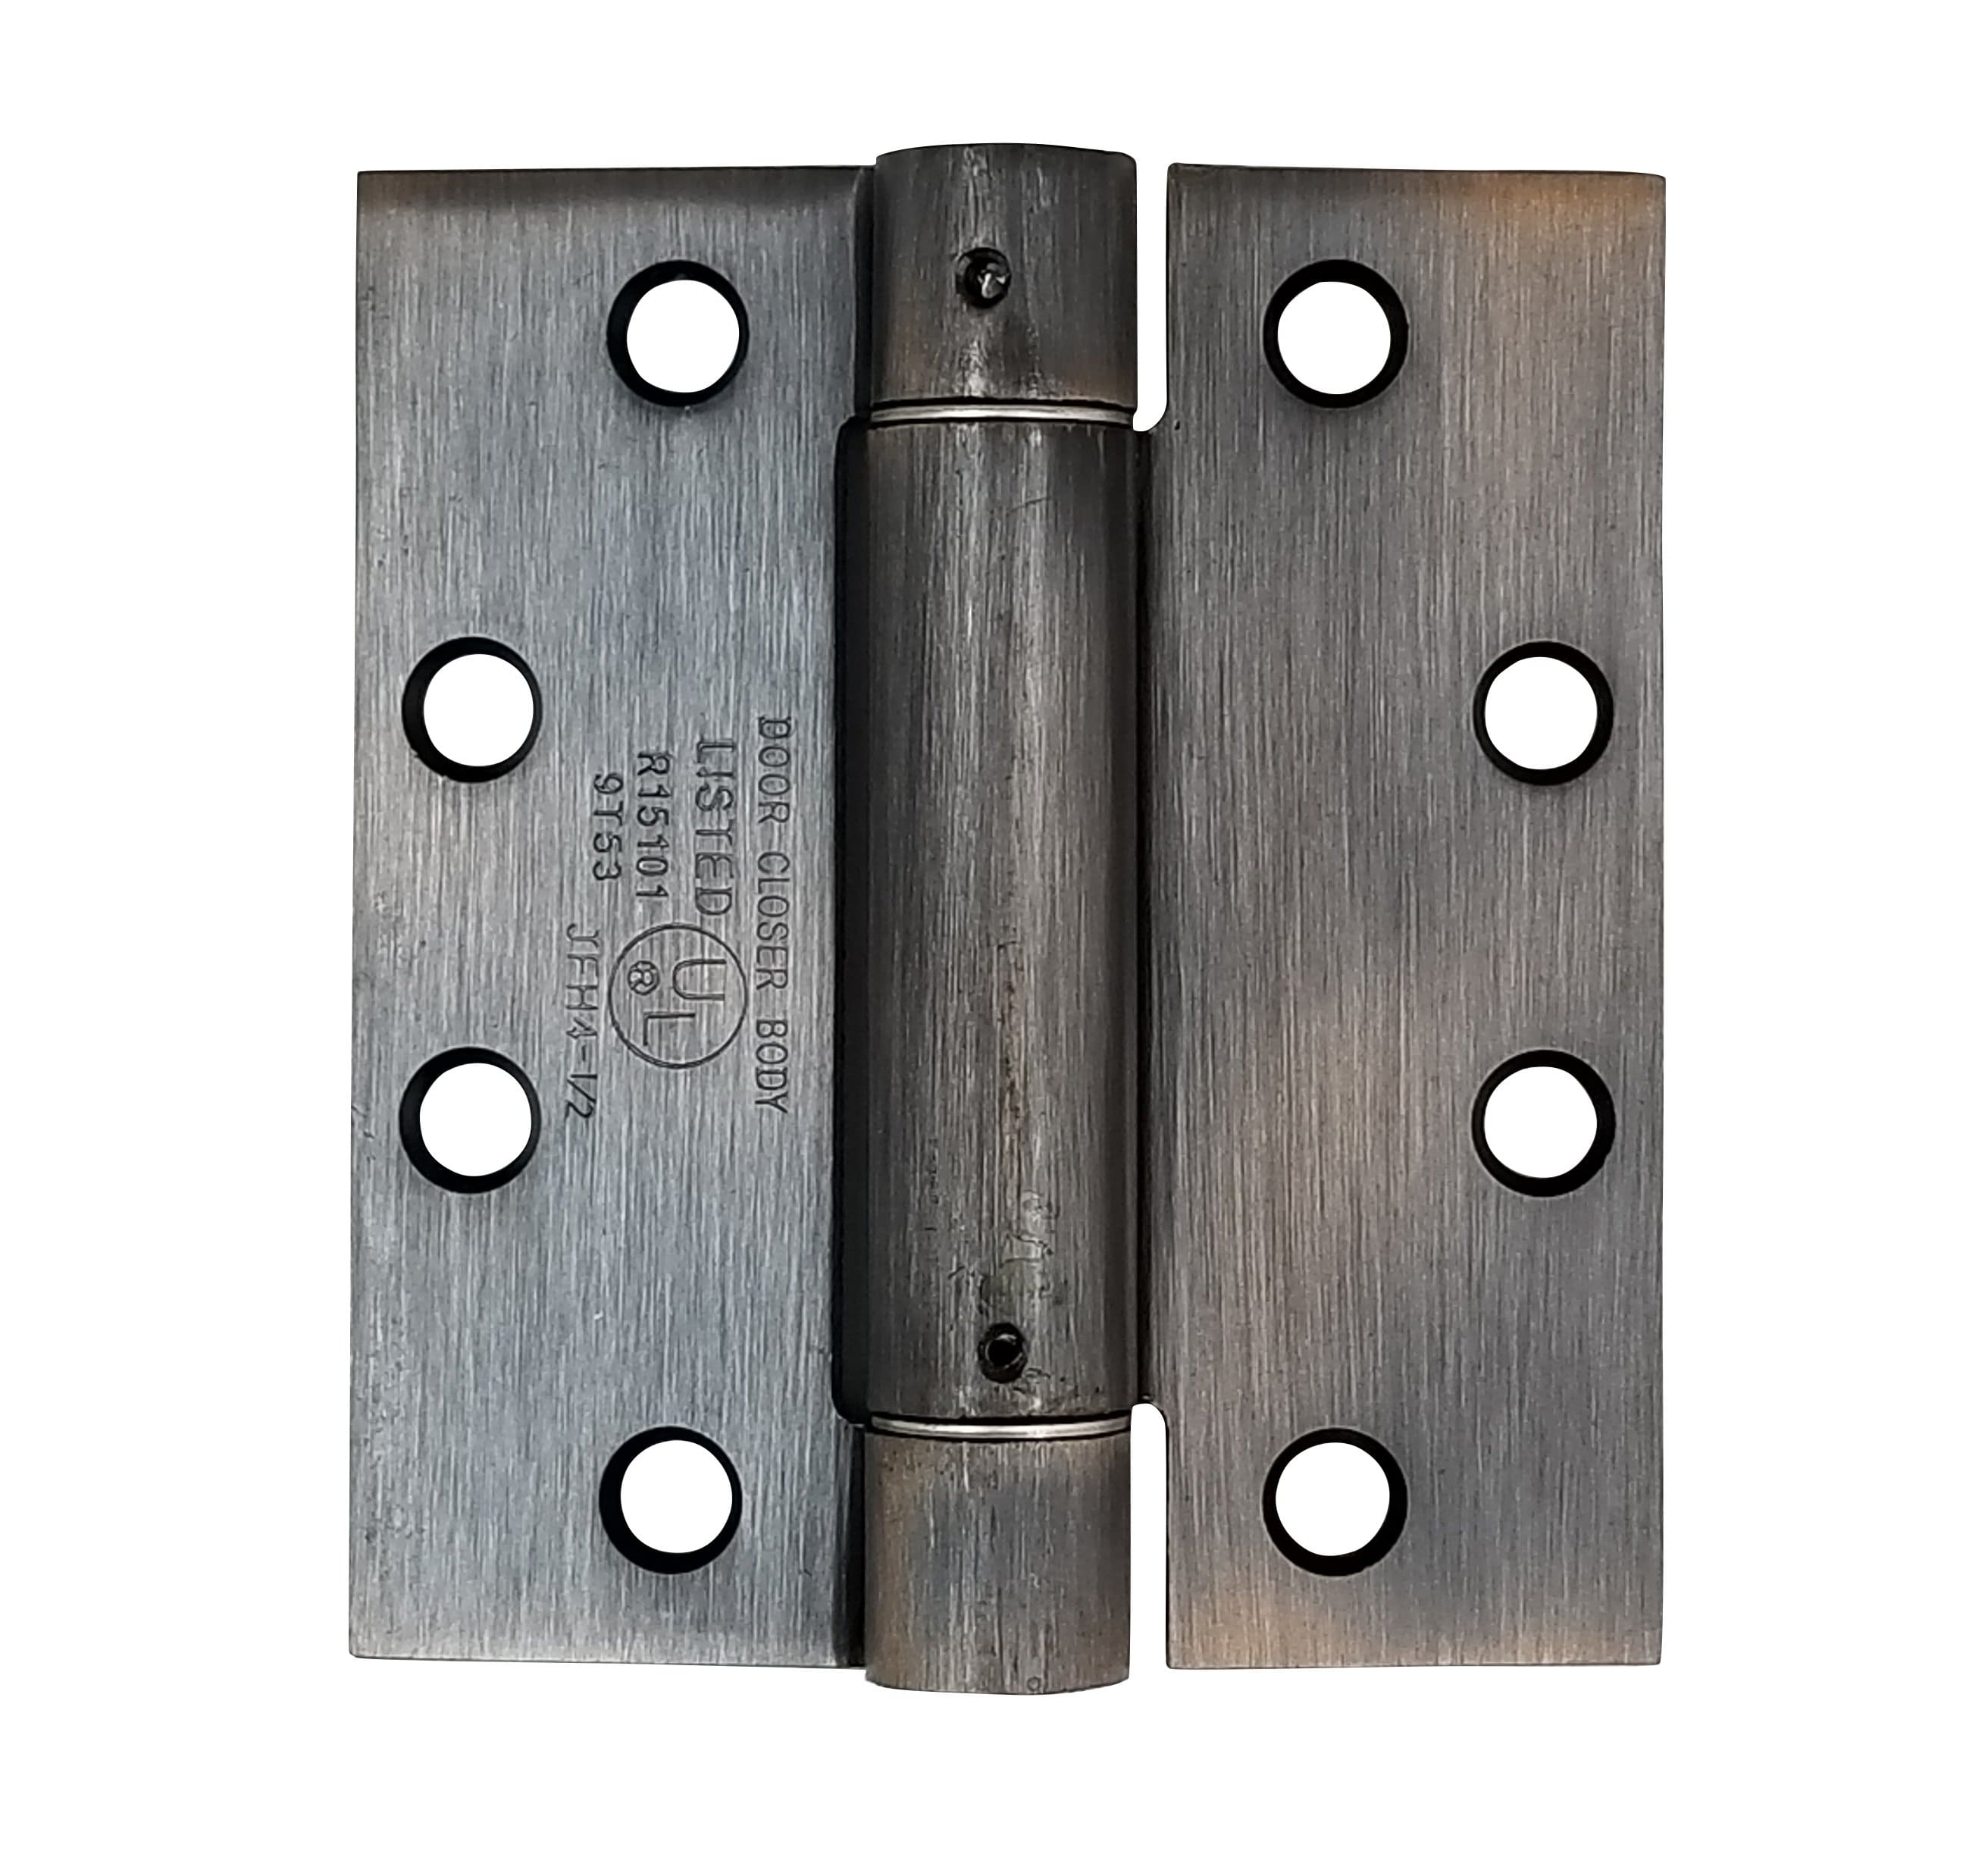 Door Hinge Shims To Straighten Doors - 3.5 Inch, 4 Inch, Or 4.5 Inch - Made  In The Usa